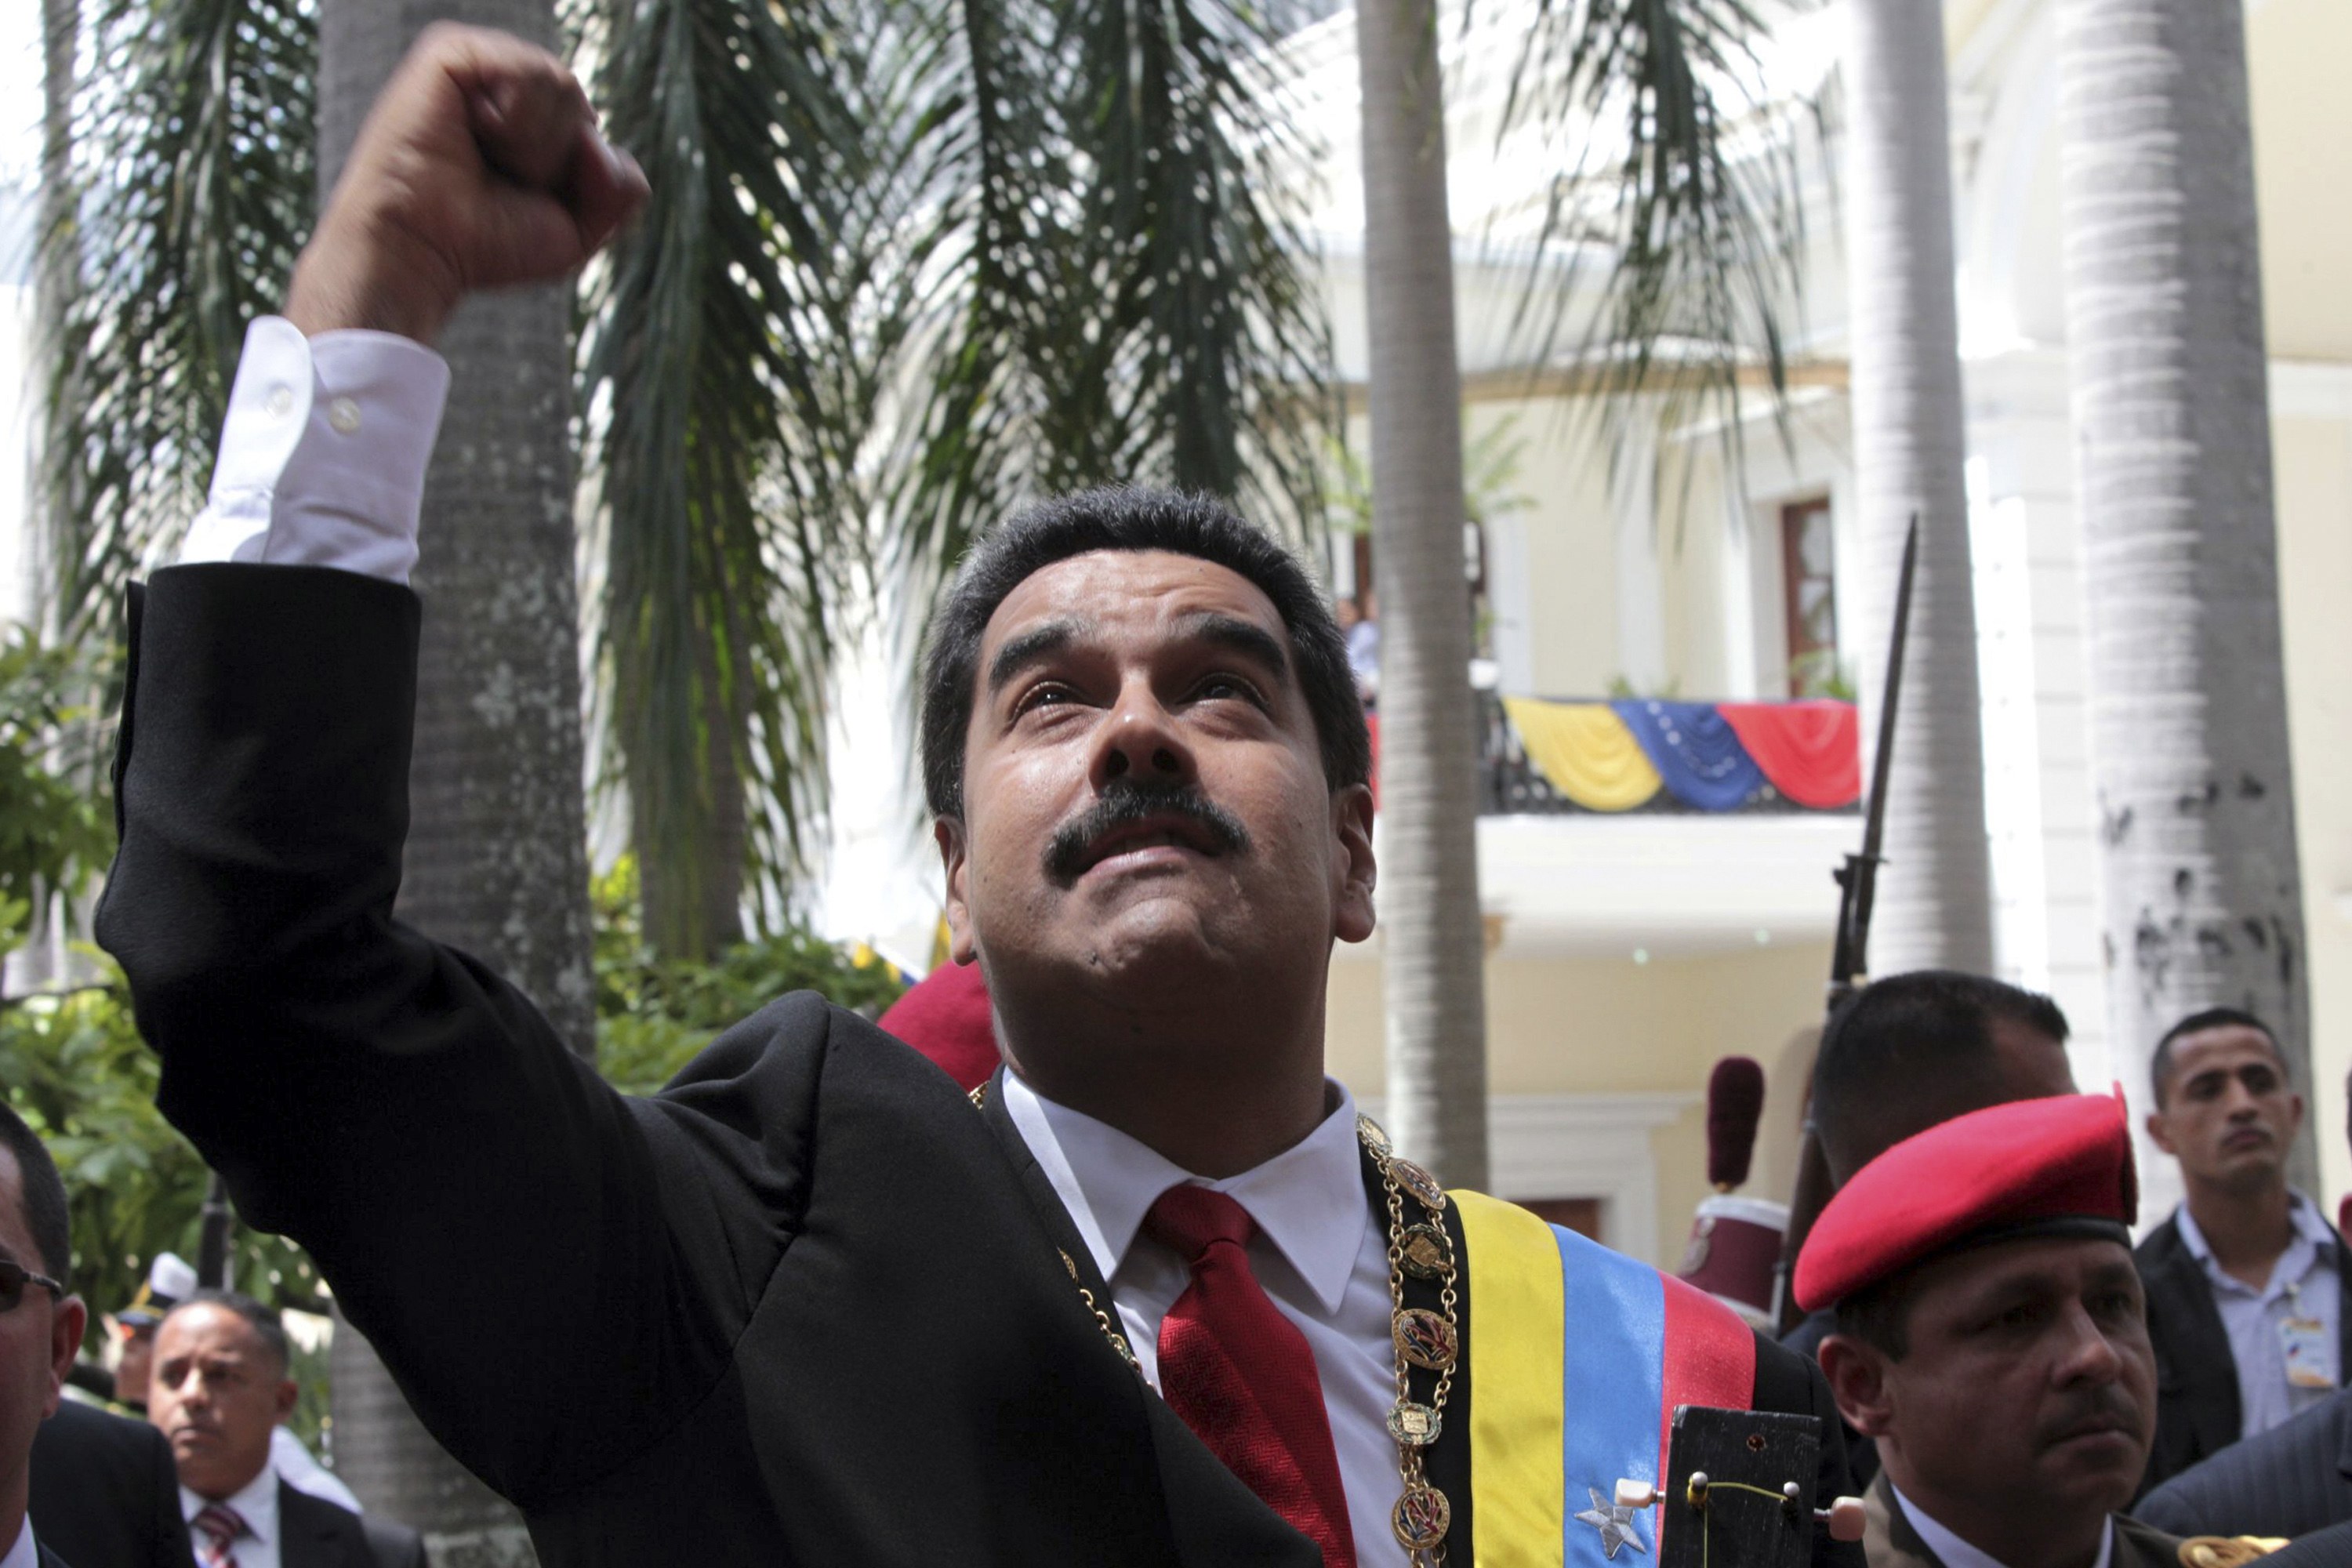 Venezuela expels top U.S. diplomat for fomenting 'sabotage'